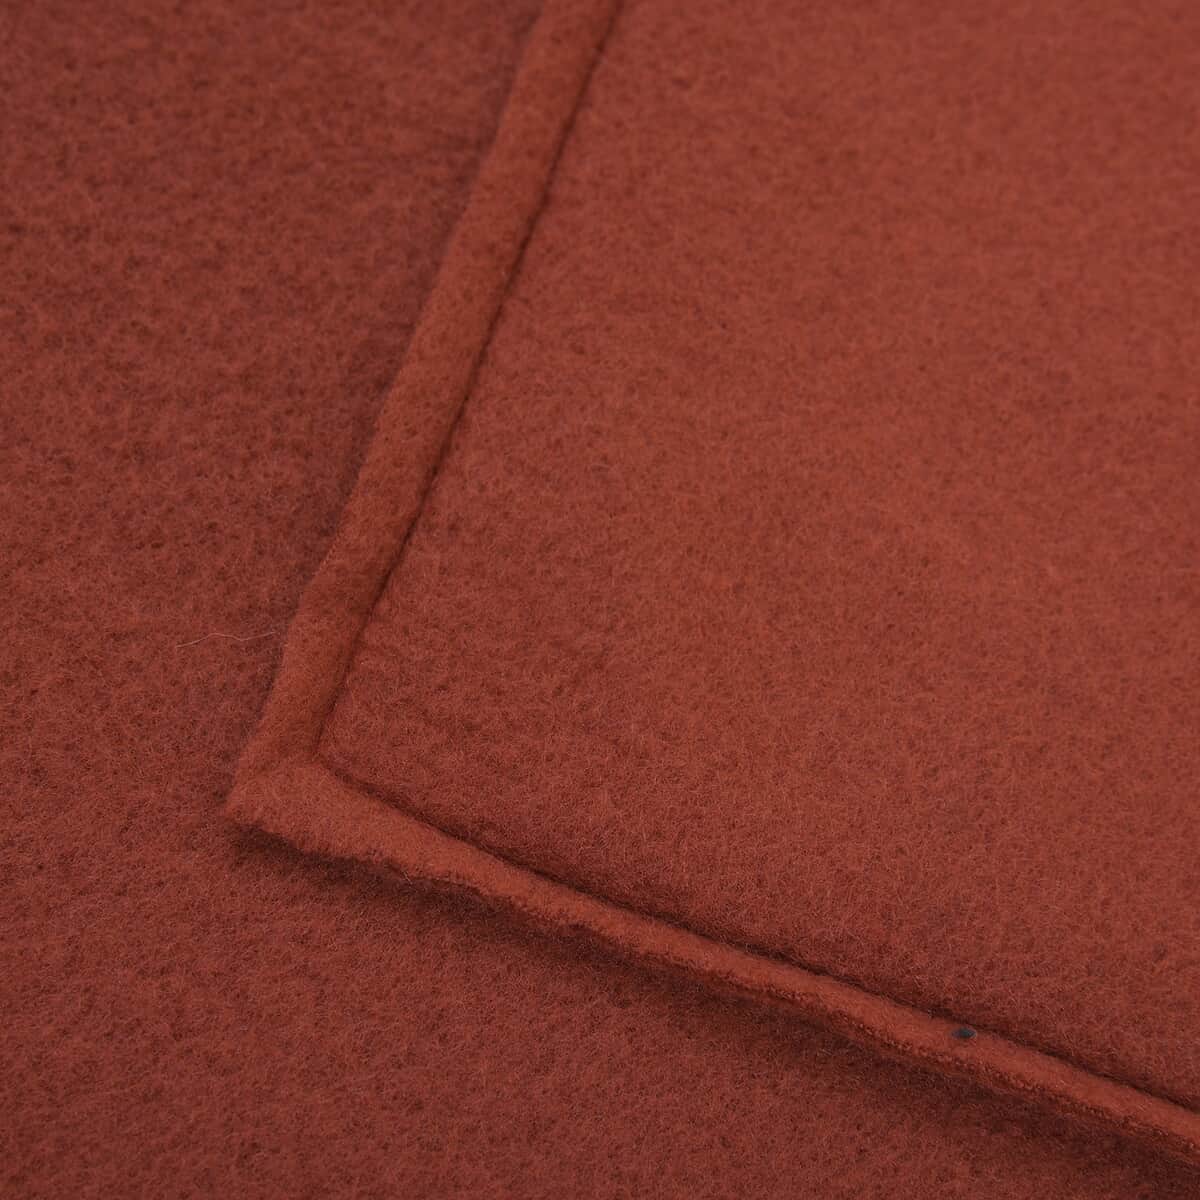 HOMESMART 2 in 1 Red Solid Fleece Travel Blanket (51"X67") with Folded Storage Pocket (Microfiber) image number 2